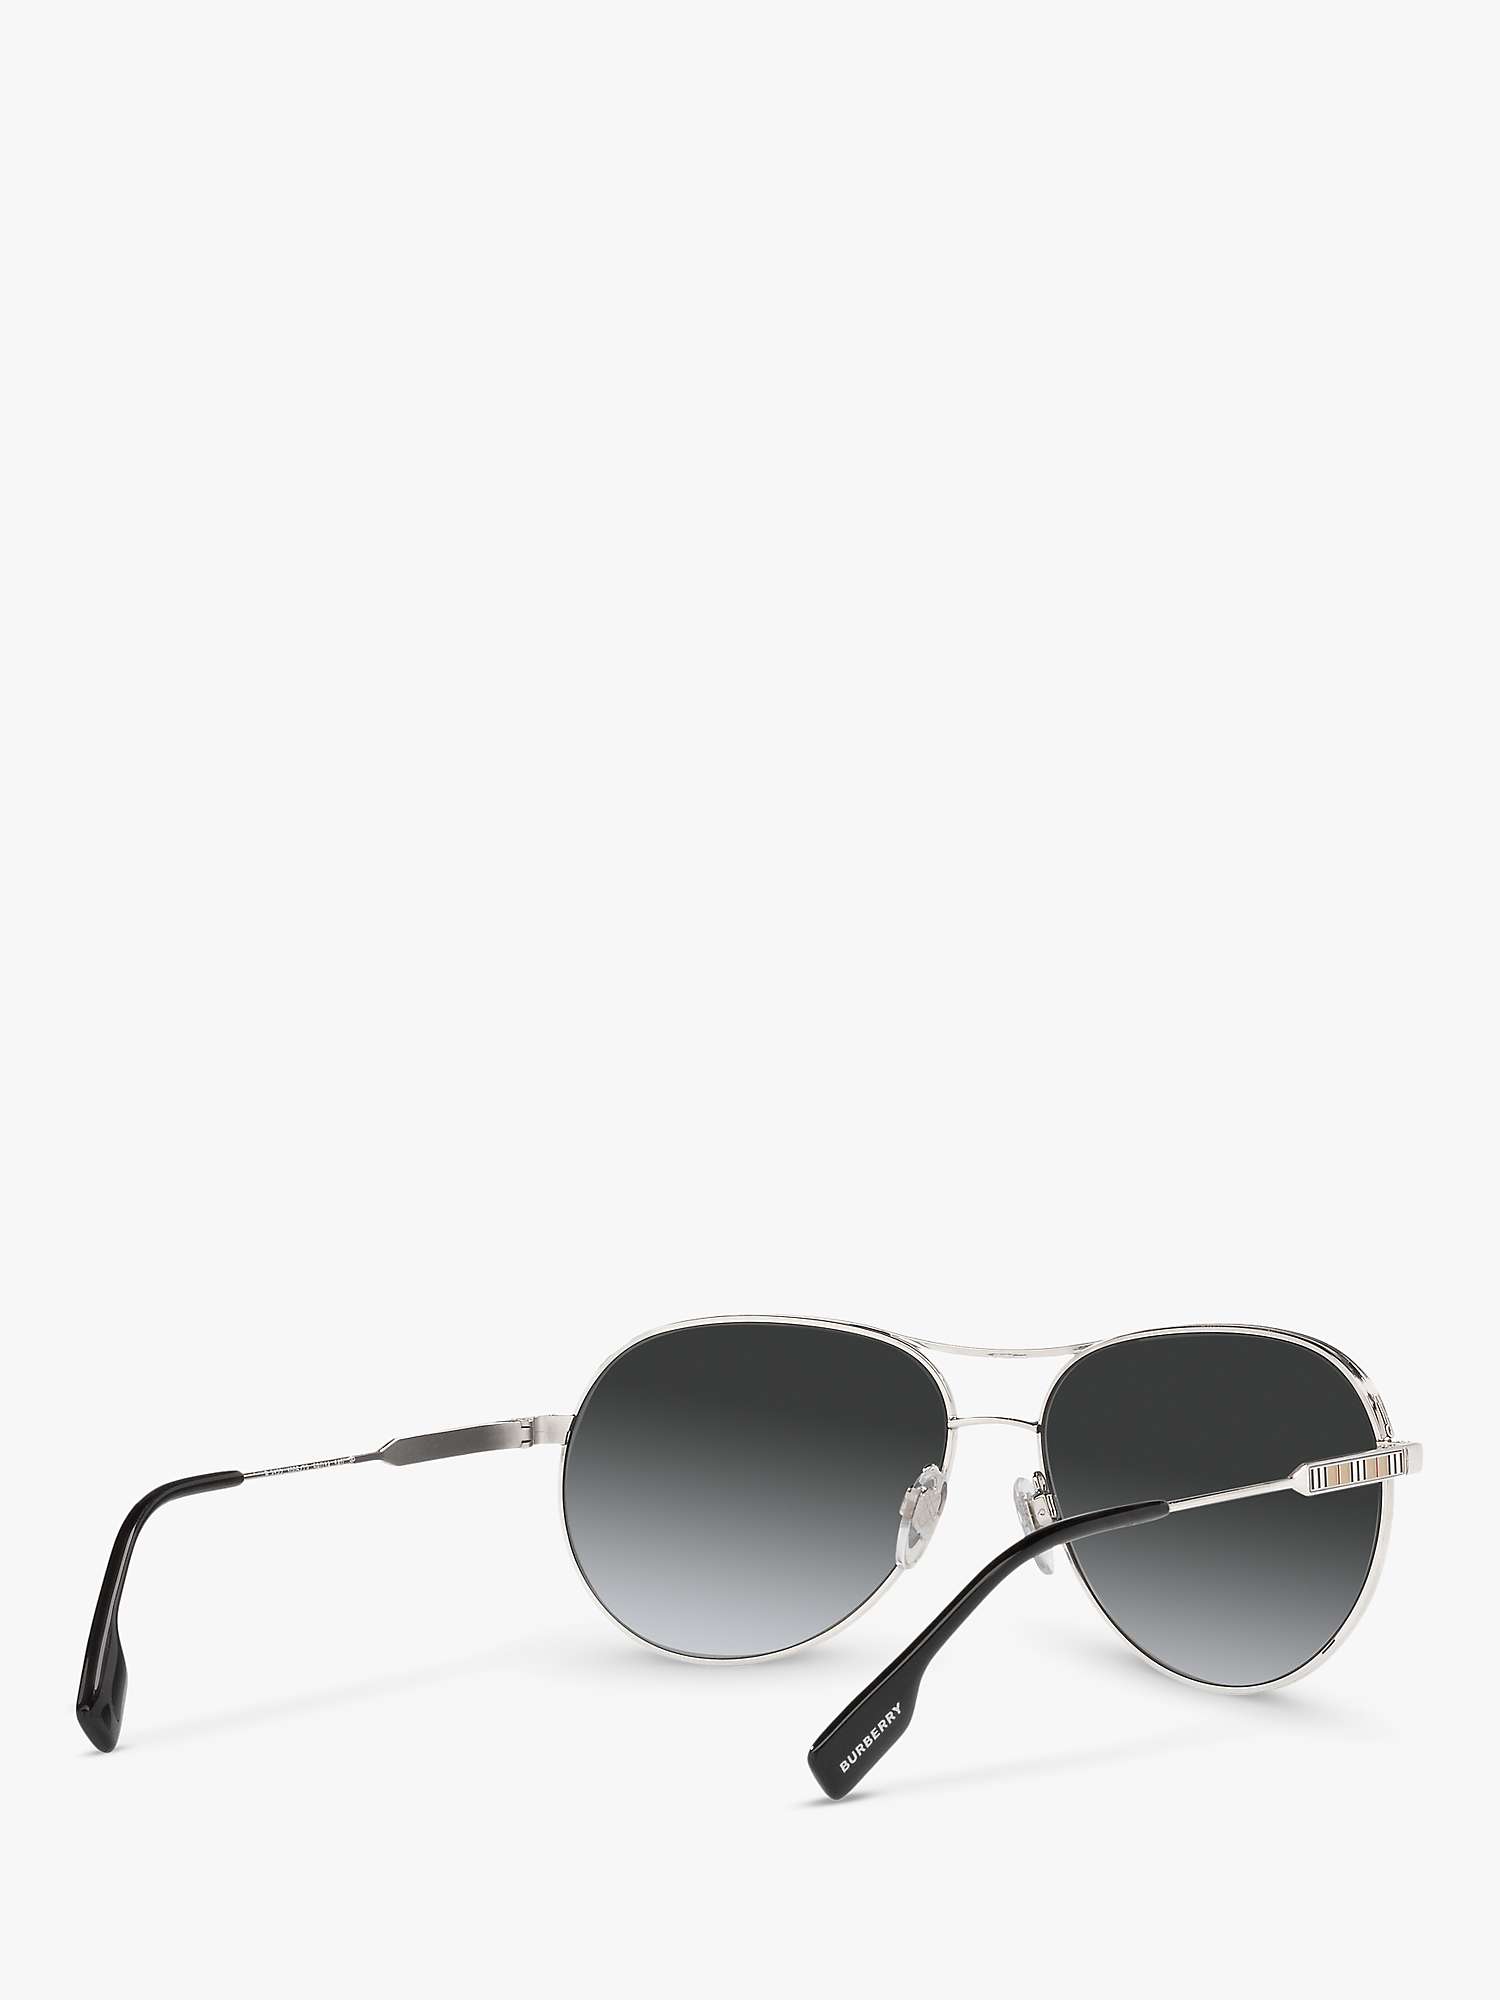 Buy Burberry BE3122 Women's Aviator Sunglasses Online at johnlewis.com